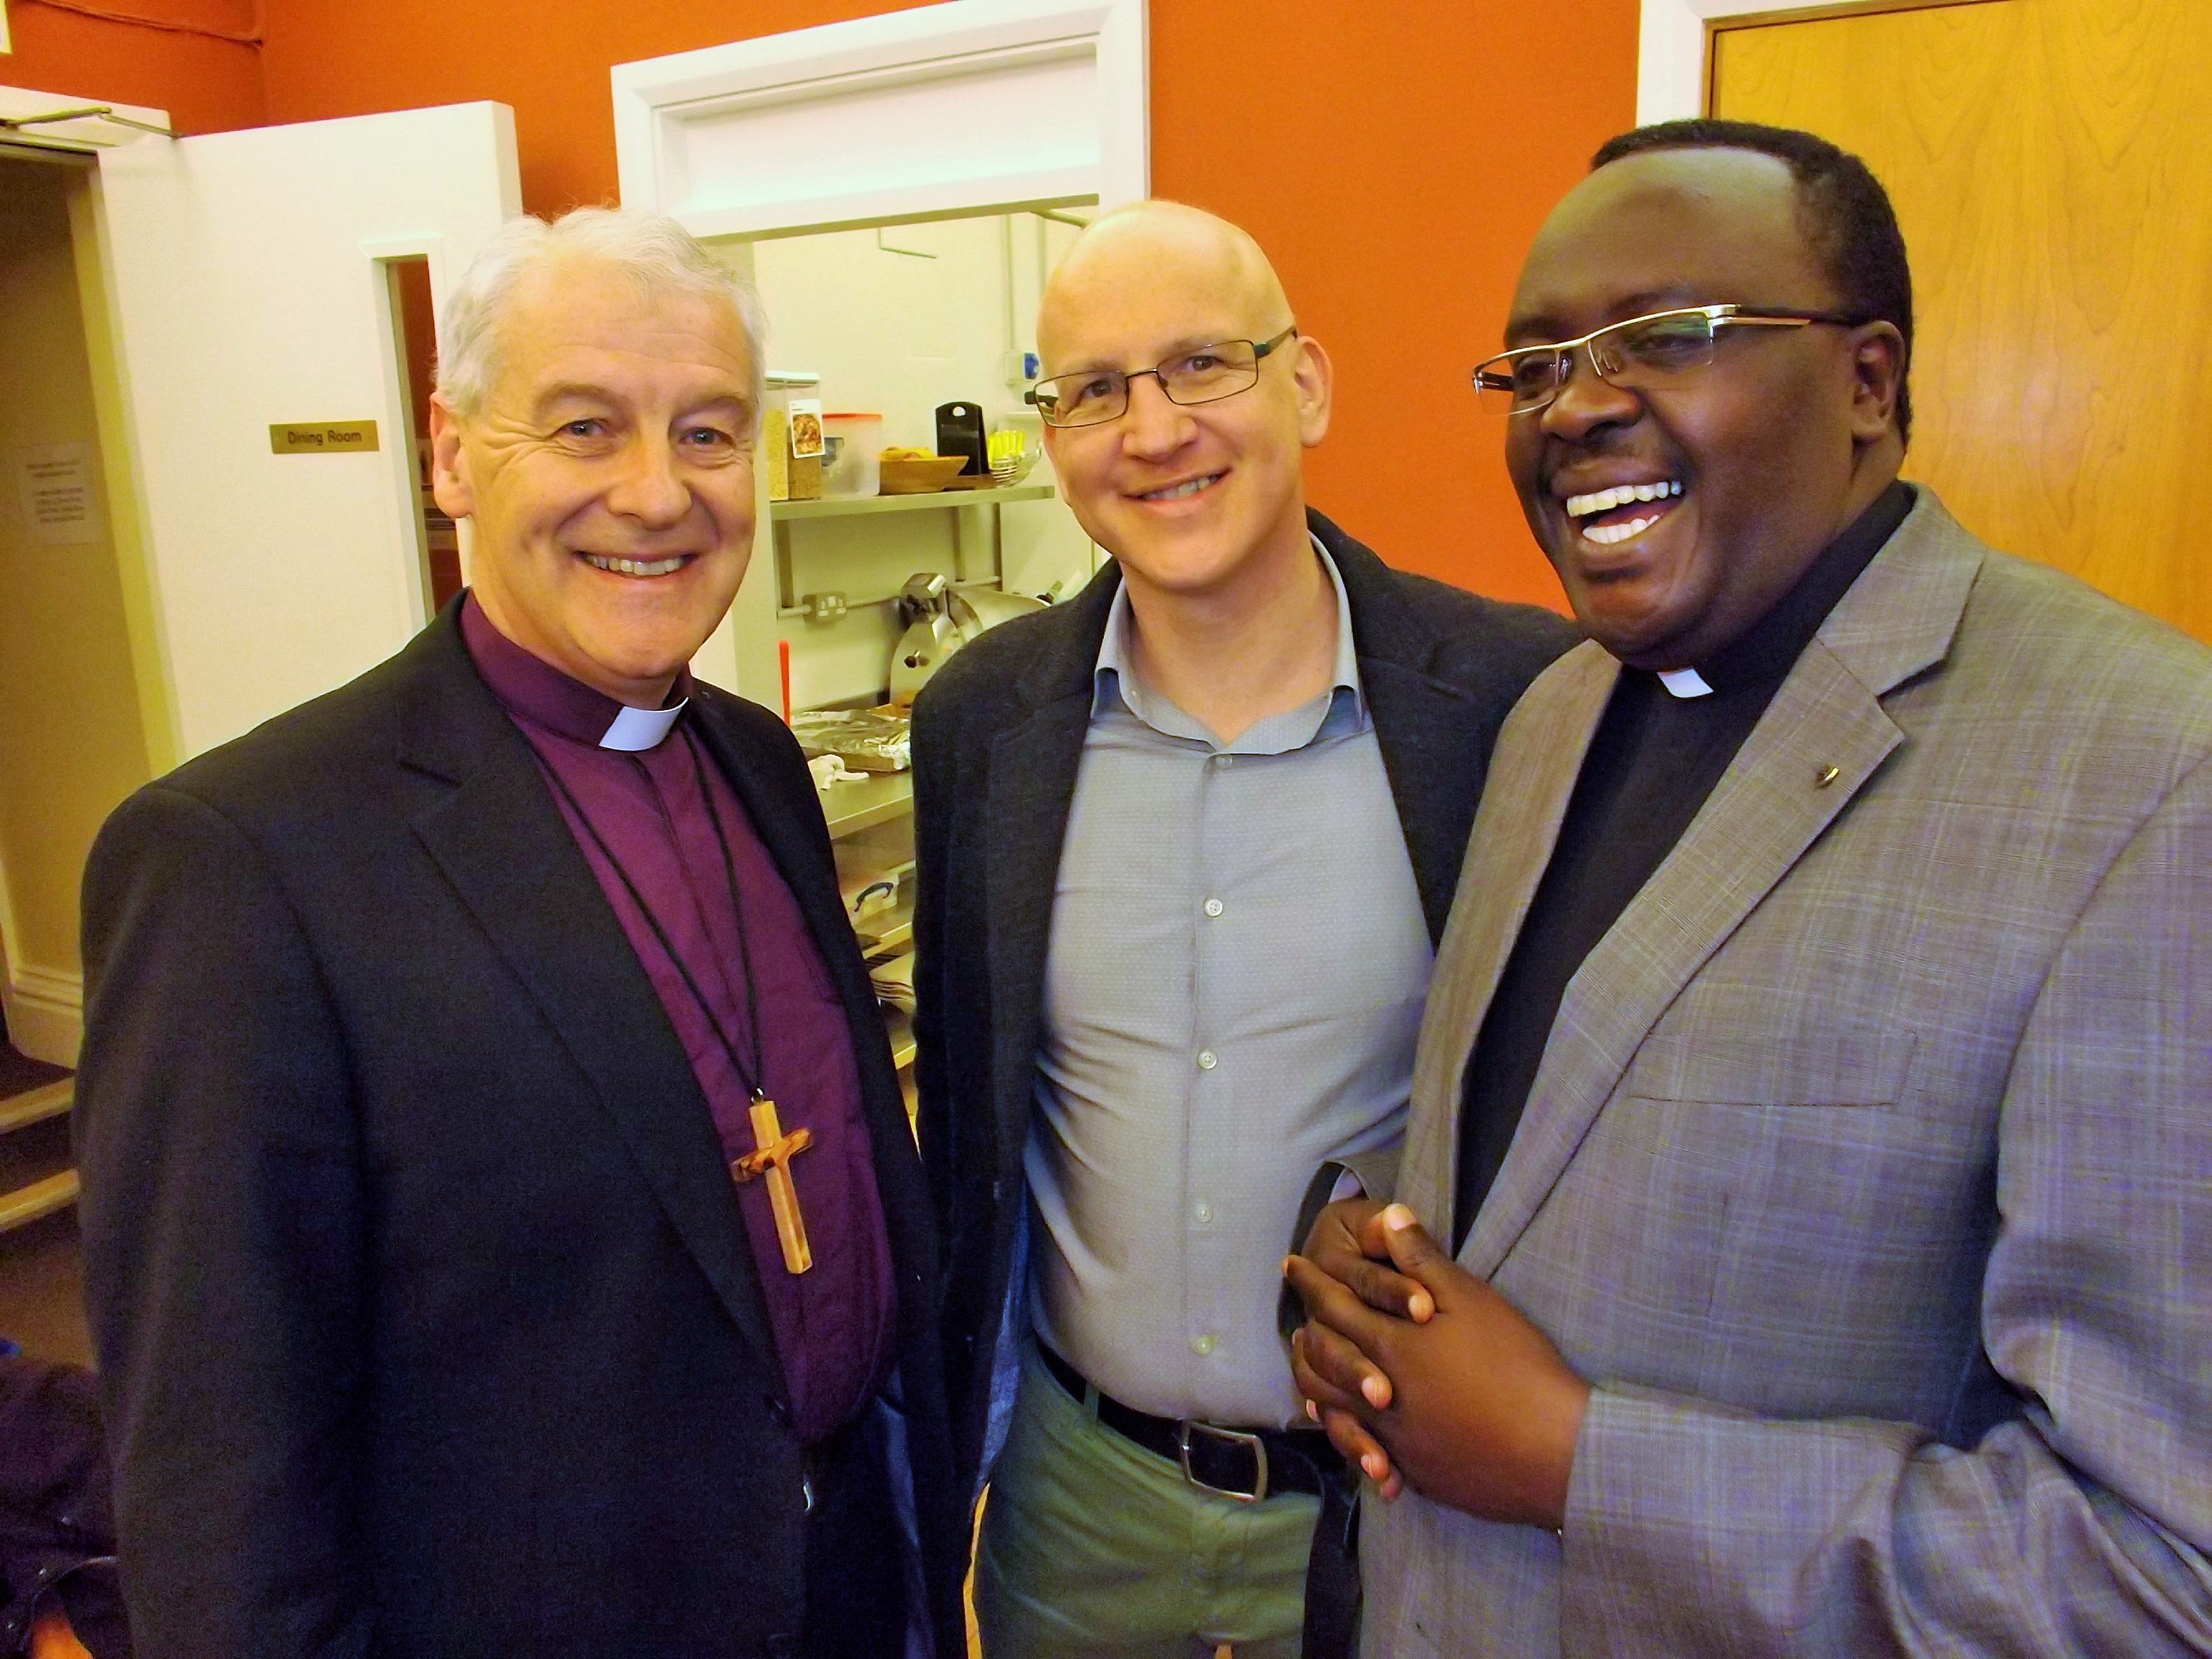 Archbishop of Dublin, Michael Jackson, CITI student, Graham Jones  & Provost Sammy Wainaina (All Saints' Cathedral, Nairobi)